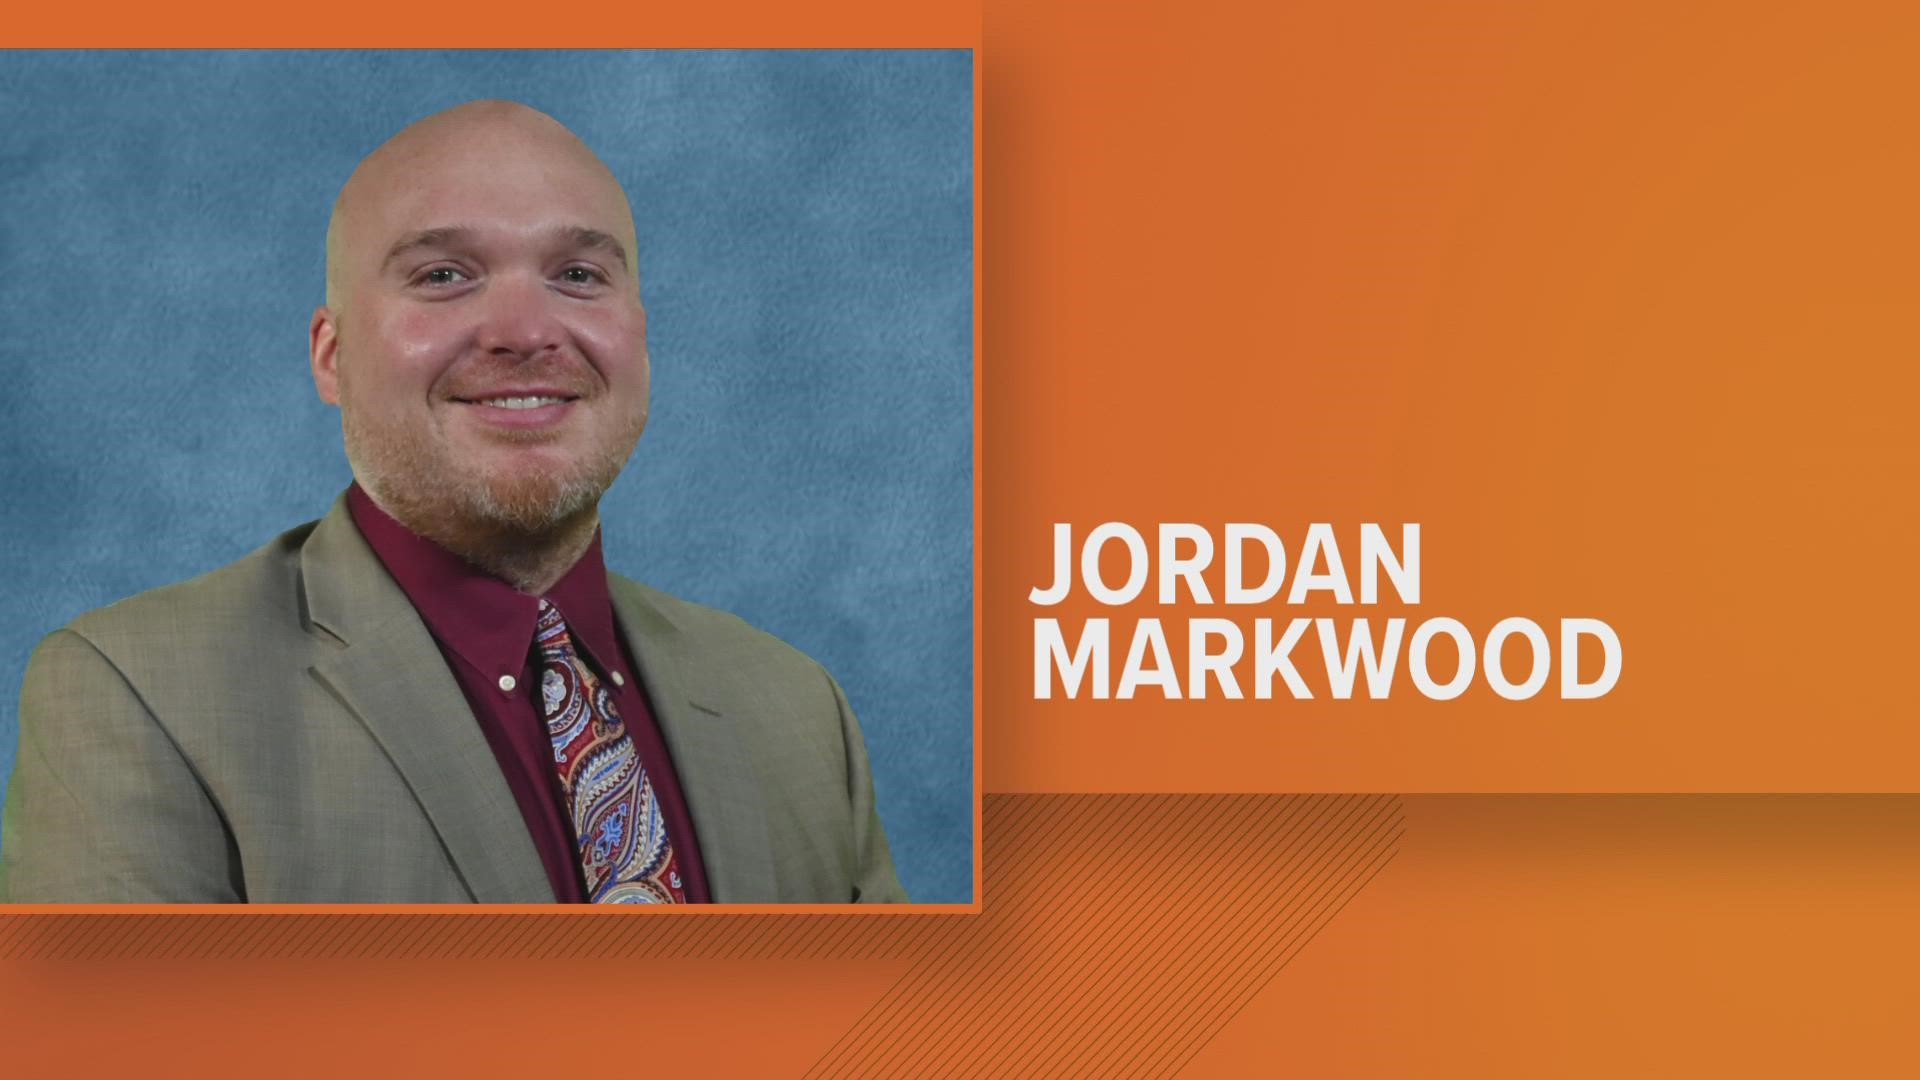 Congratulations, Mr. Markwood!